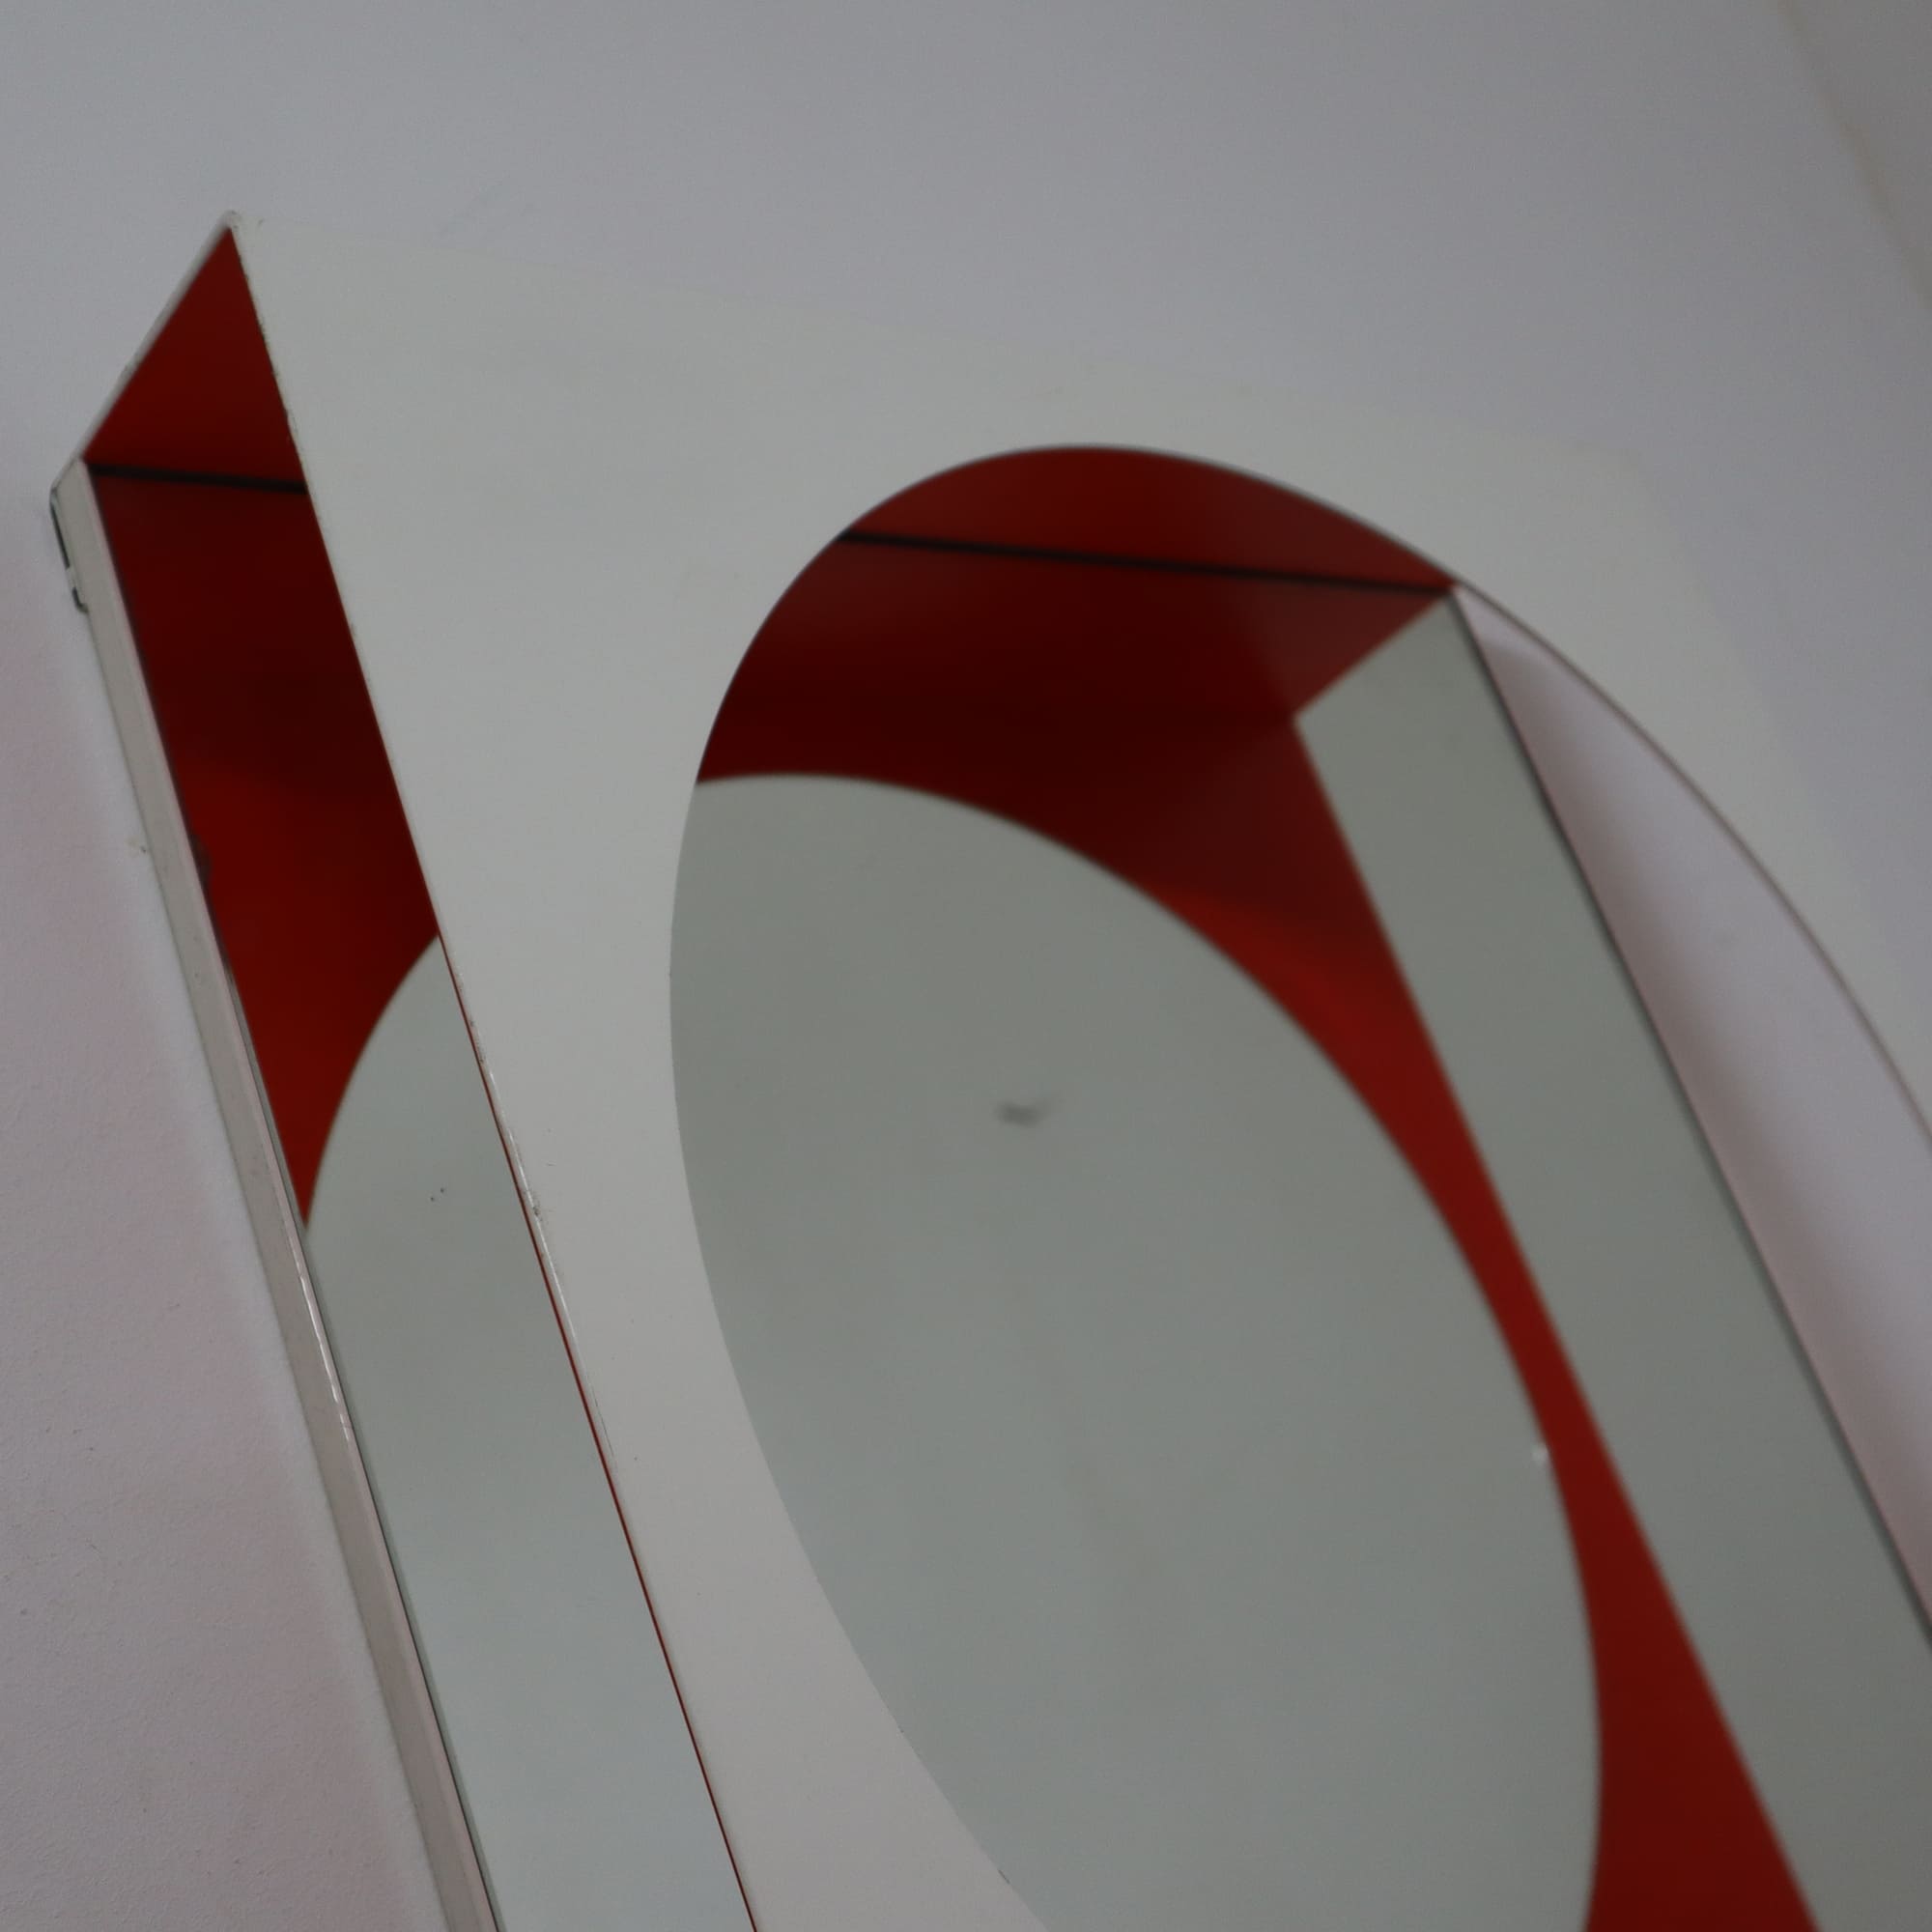 visionidepoca-visioni-depoca-specchio-geometrico-70s-metallo-rosso-arredamento-modernariato-vintage-3